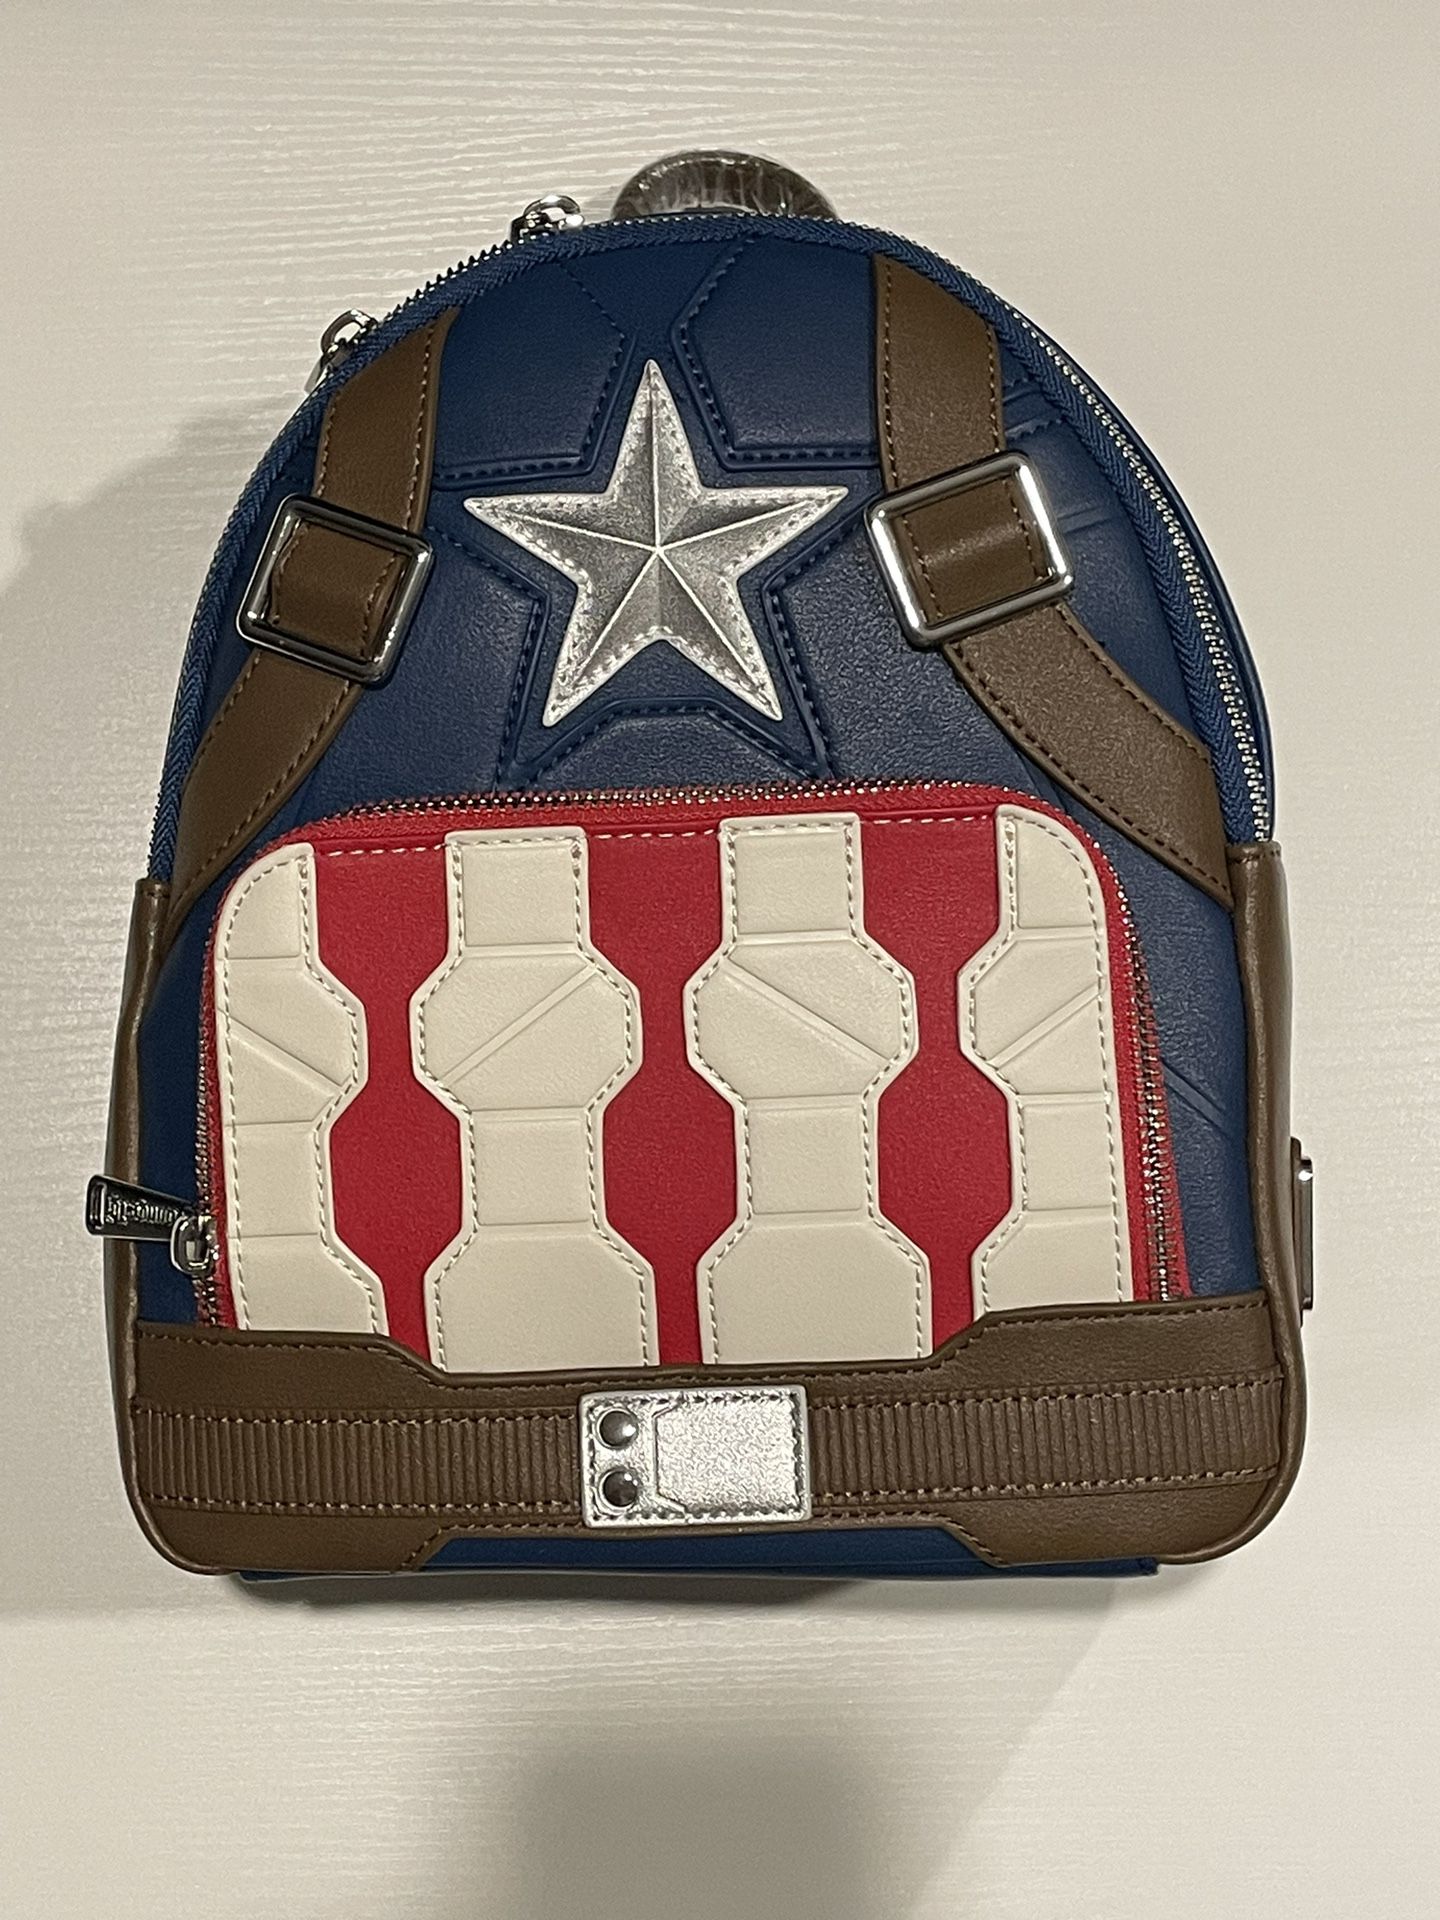 Captain America Loungefly Bag